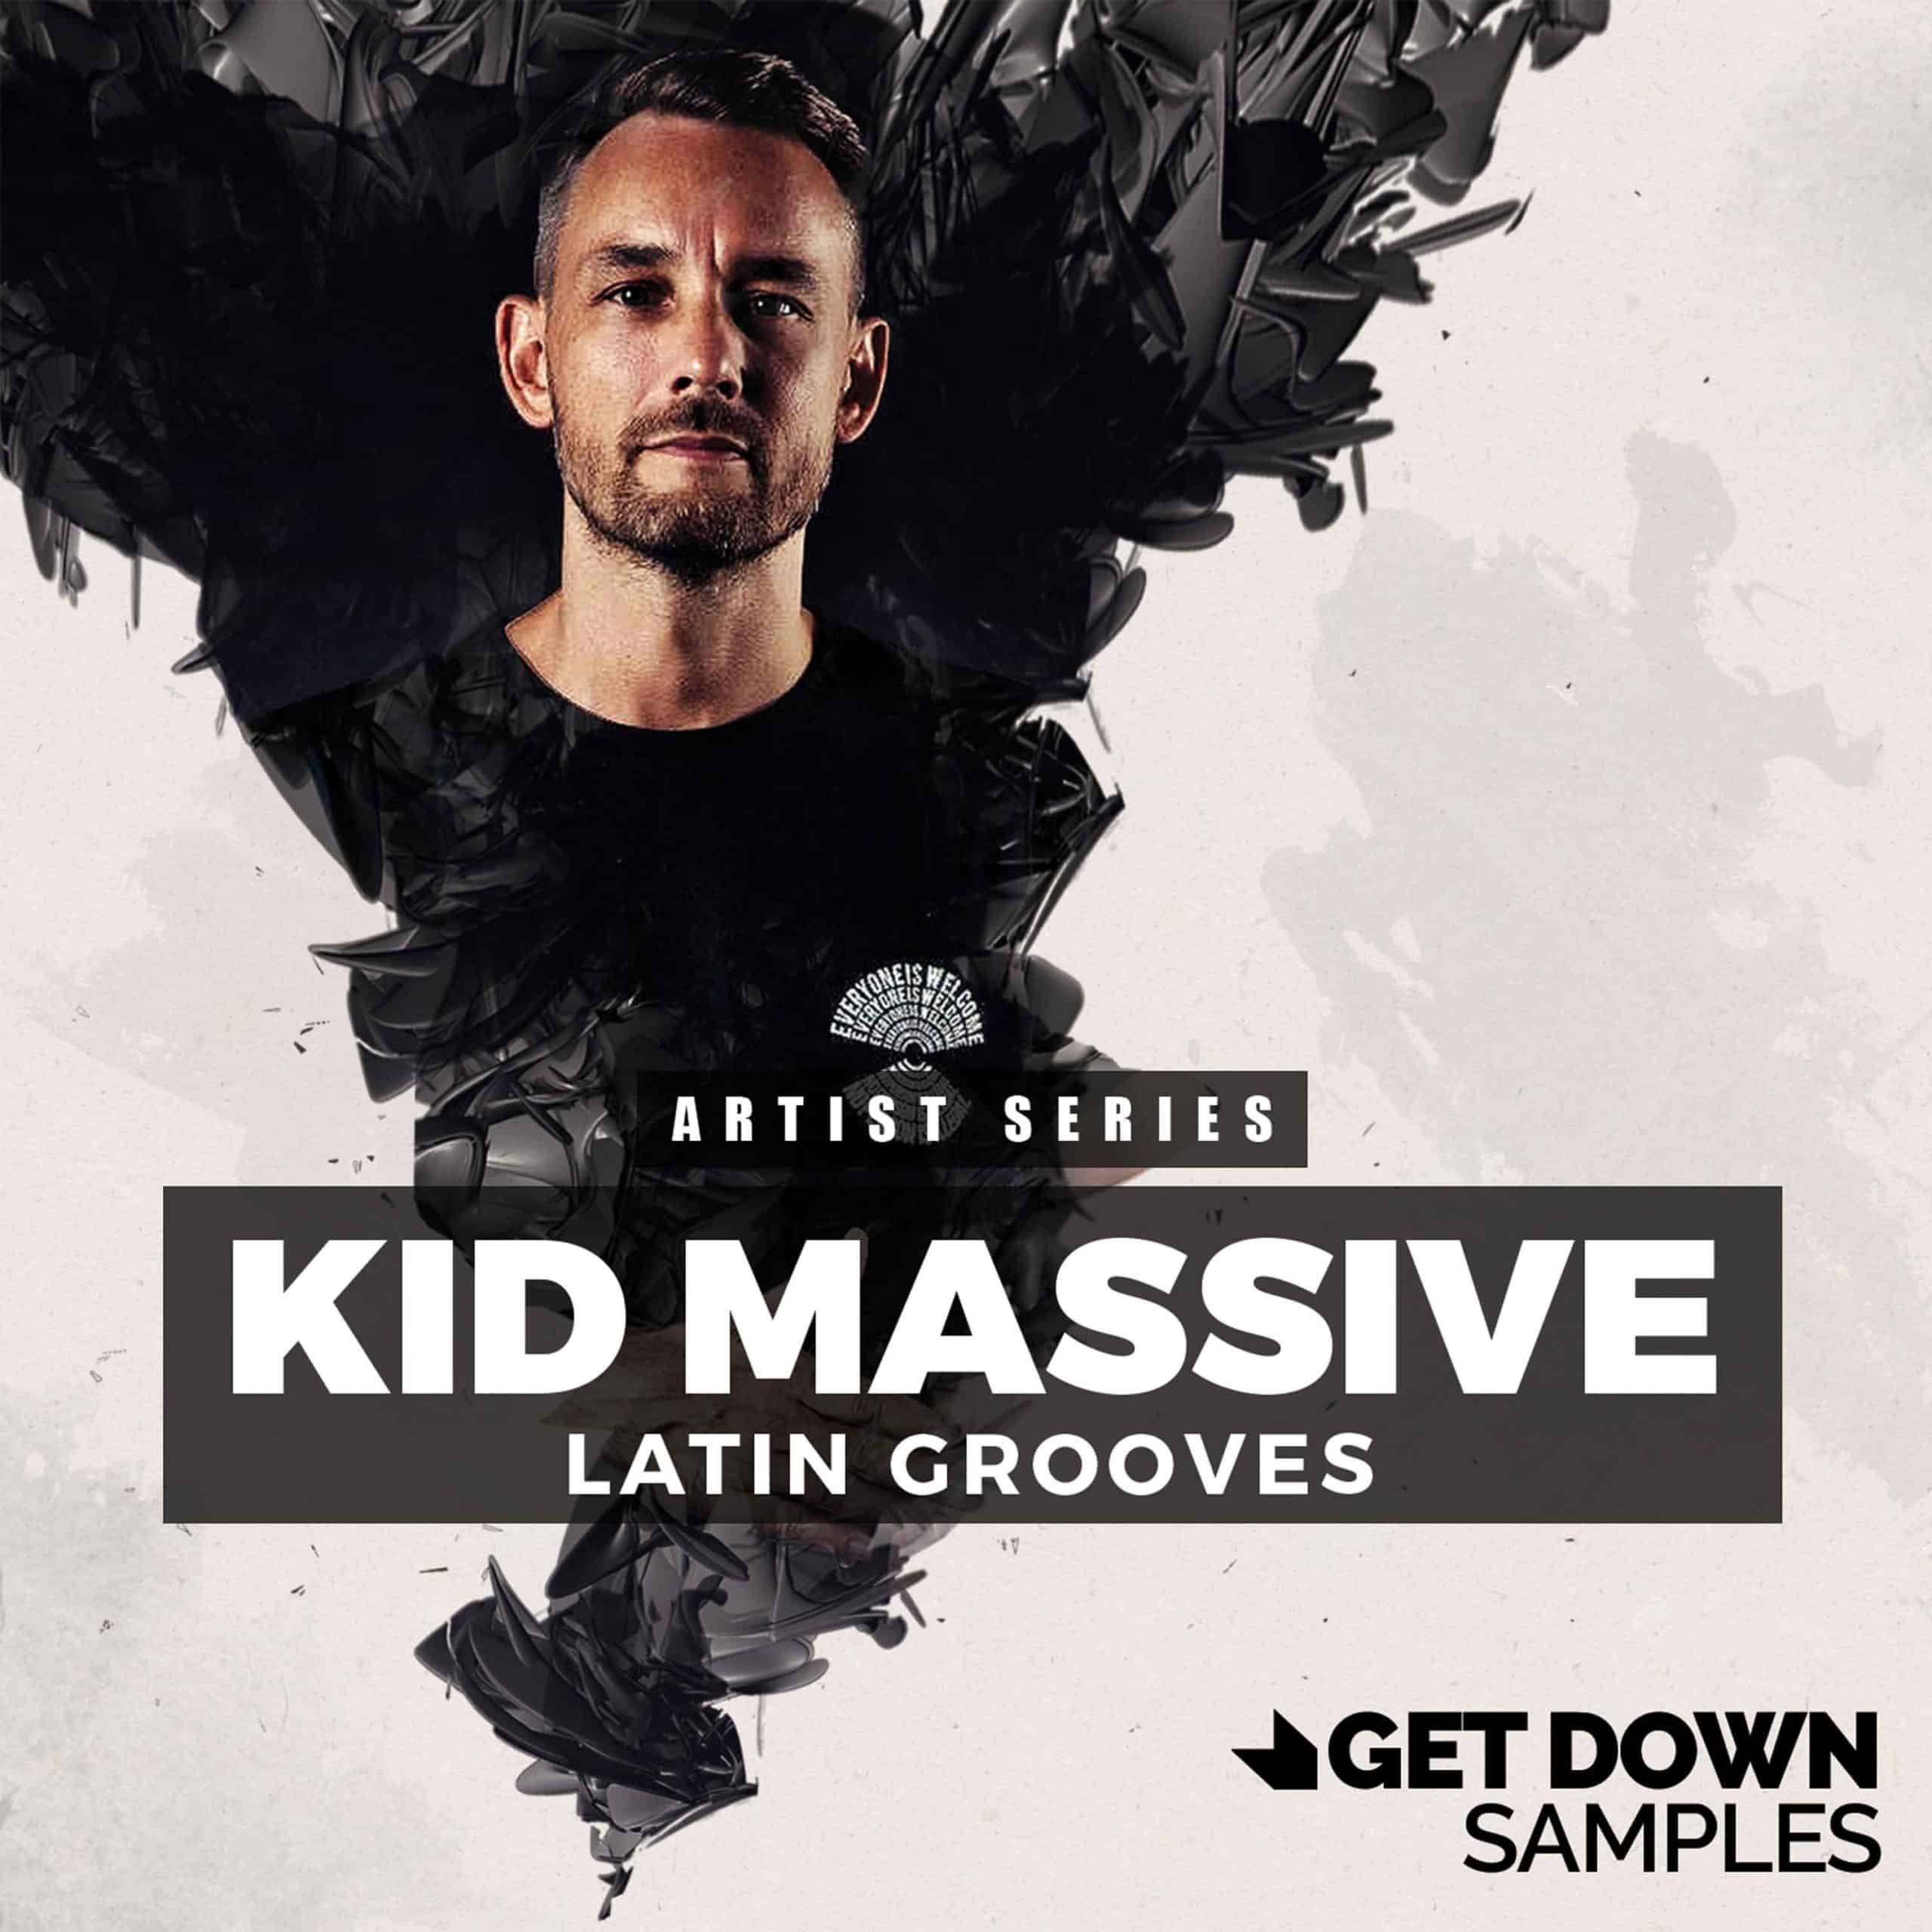 Get Down Samples – Kid Massive Latin Grooves